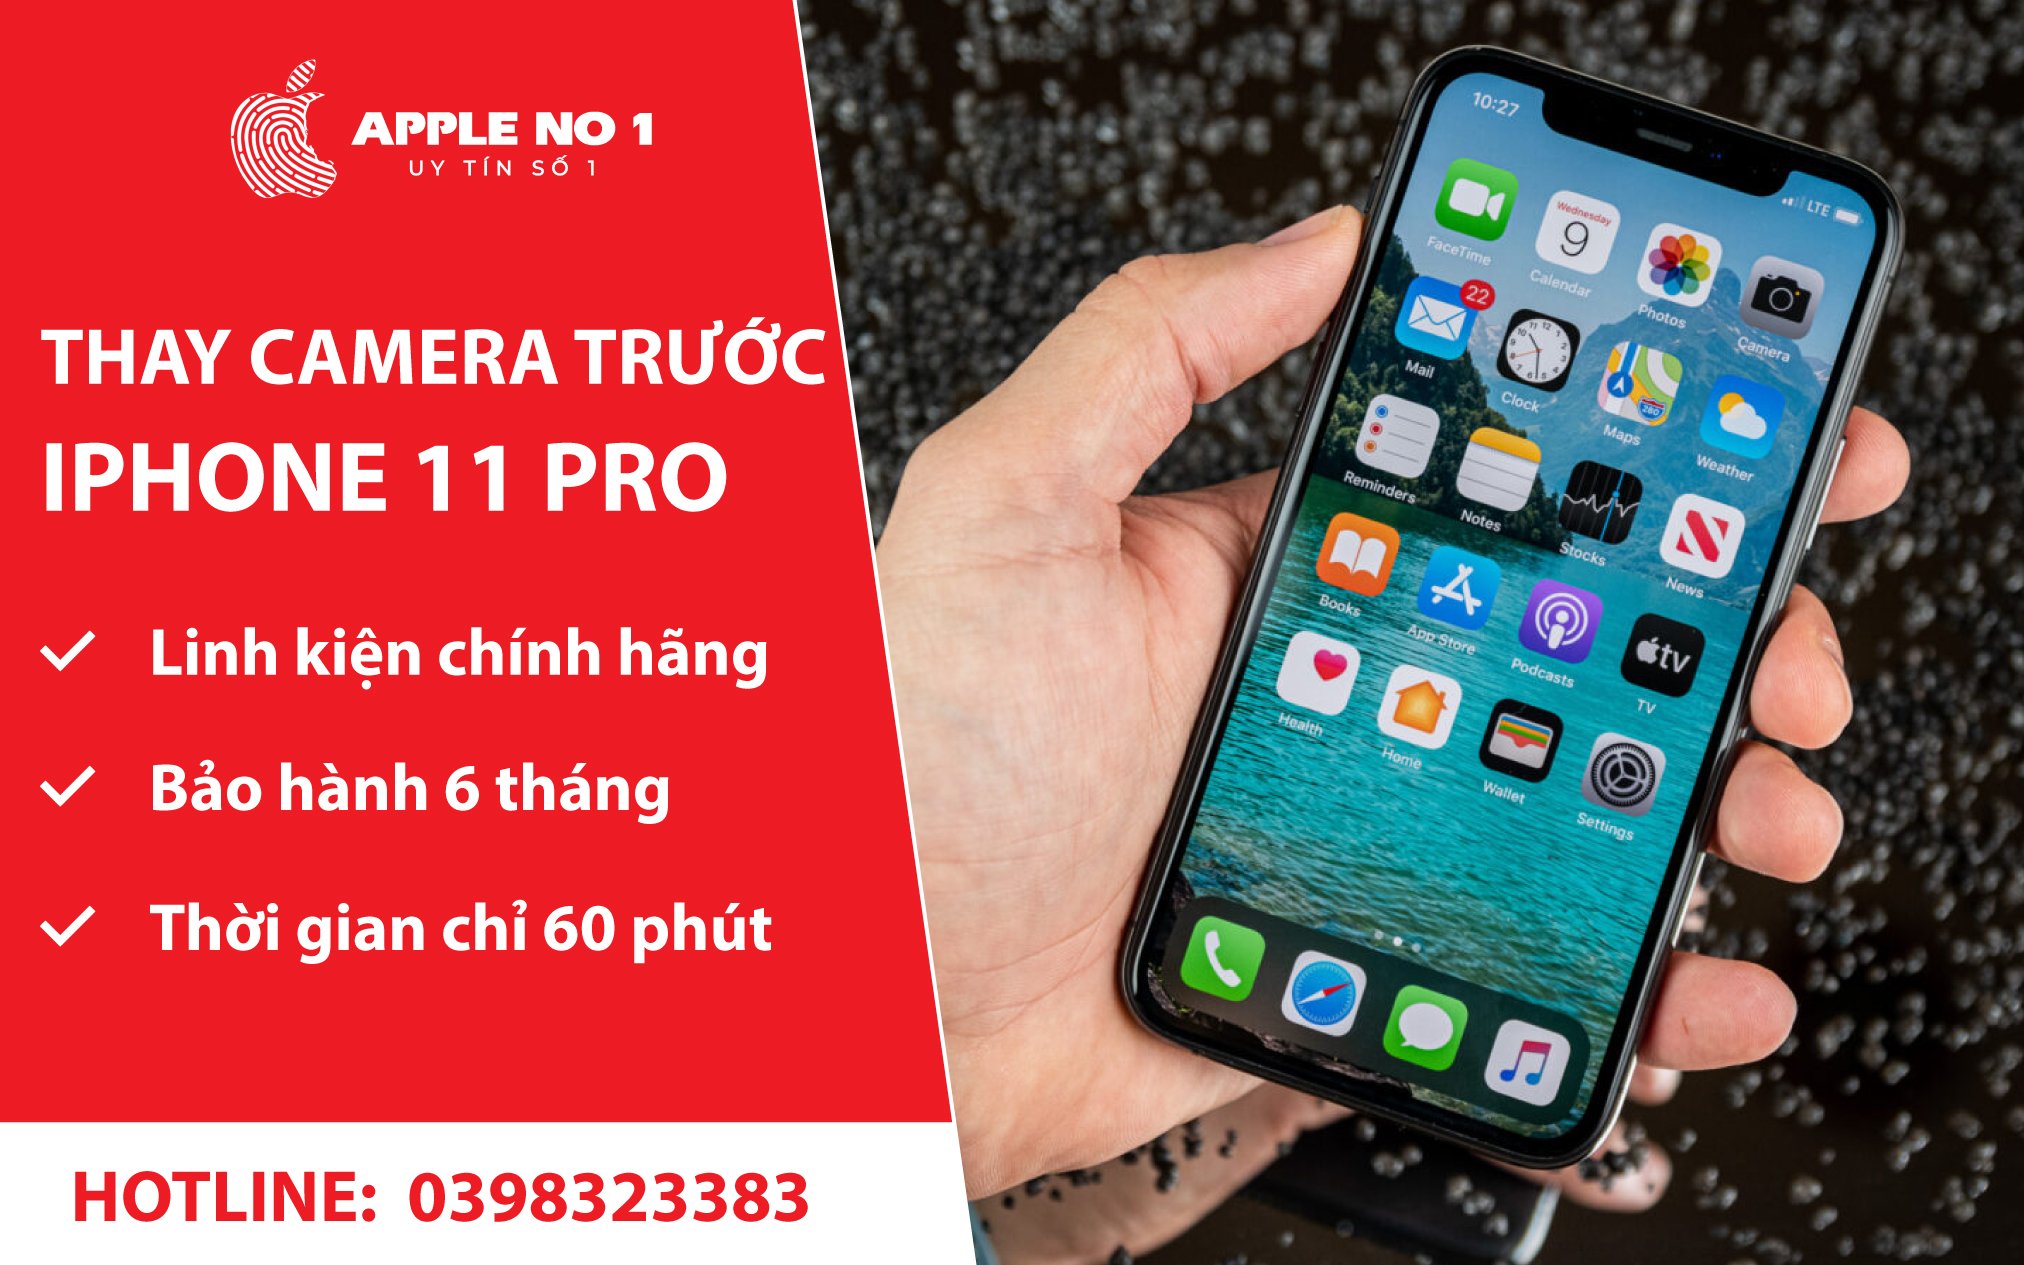 thay camera truoc iphone 11 pro gia tot, chinh hang tai apple no.1